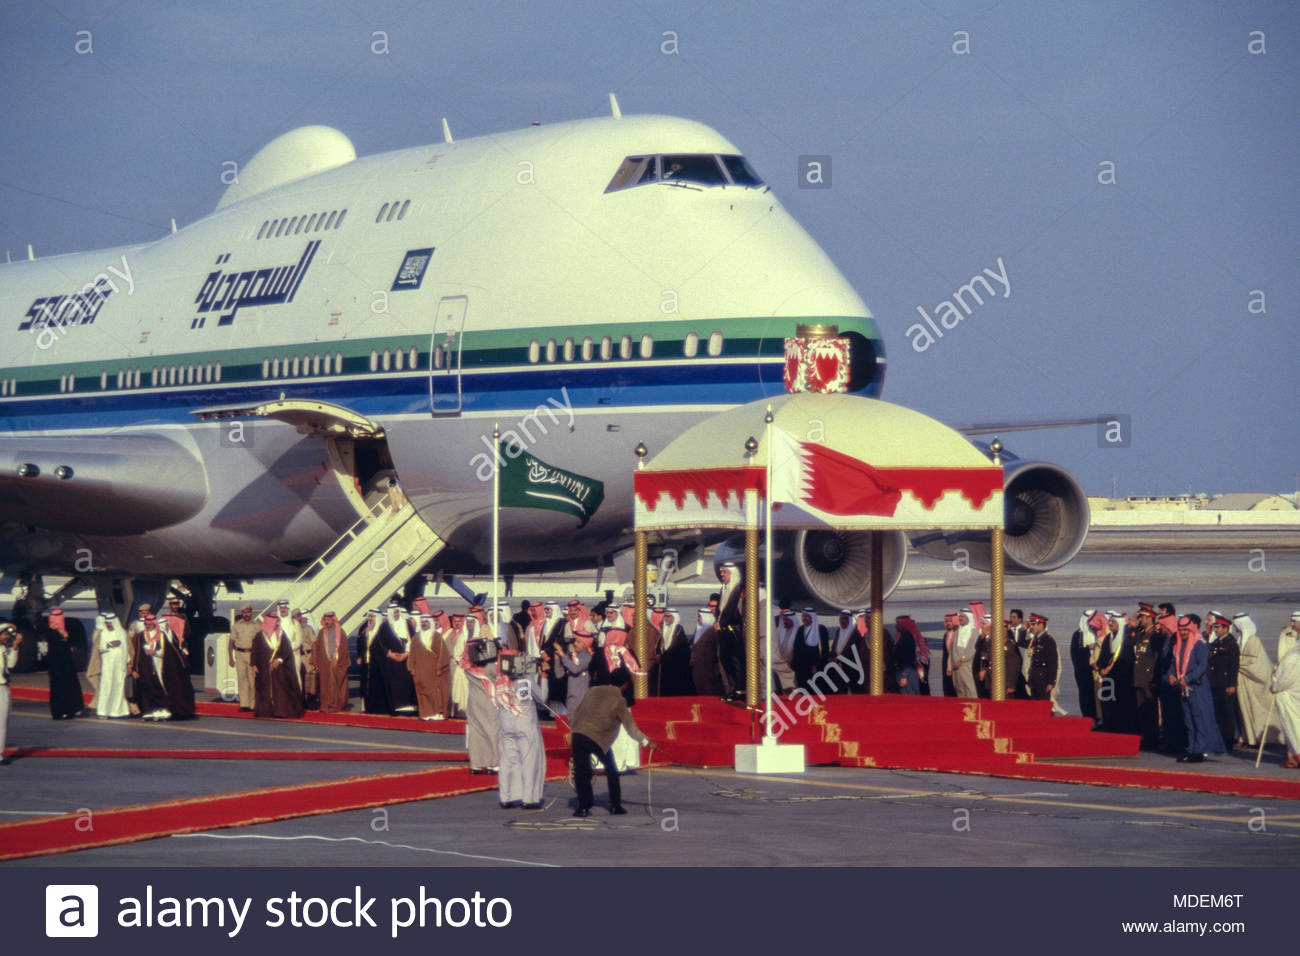 manama-bahrain-26-november-1986-king-fahd-bin-abdulaziz-al-saud-arrives-at-bahrain-international-airport-met-by-his-royal-highness-shaikh-isa-bin-salman-al-khalifa-emir-of-the-state-of-bahrain-for-the-opening-ceremony-of-the-800-million-causeway-connecting-bahrain-and-saudi-arabia-built-by-dutch-company-ballast-nedam-MDEM6T.jpg